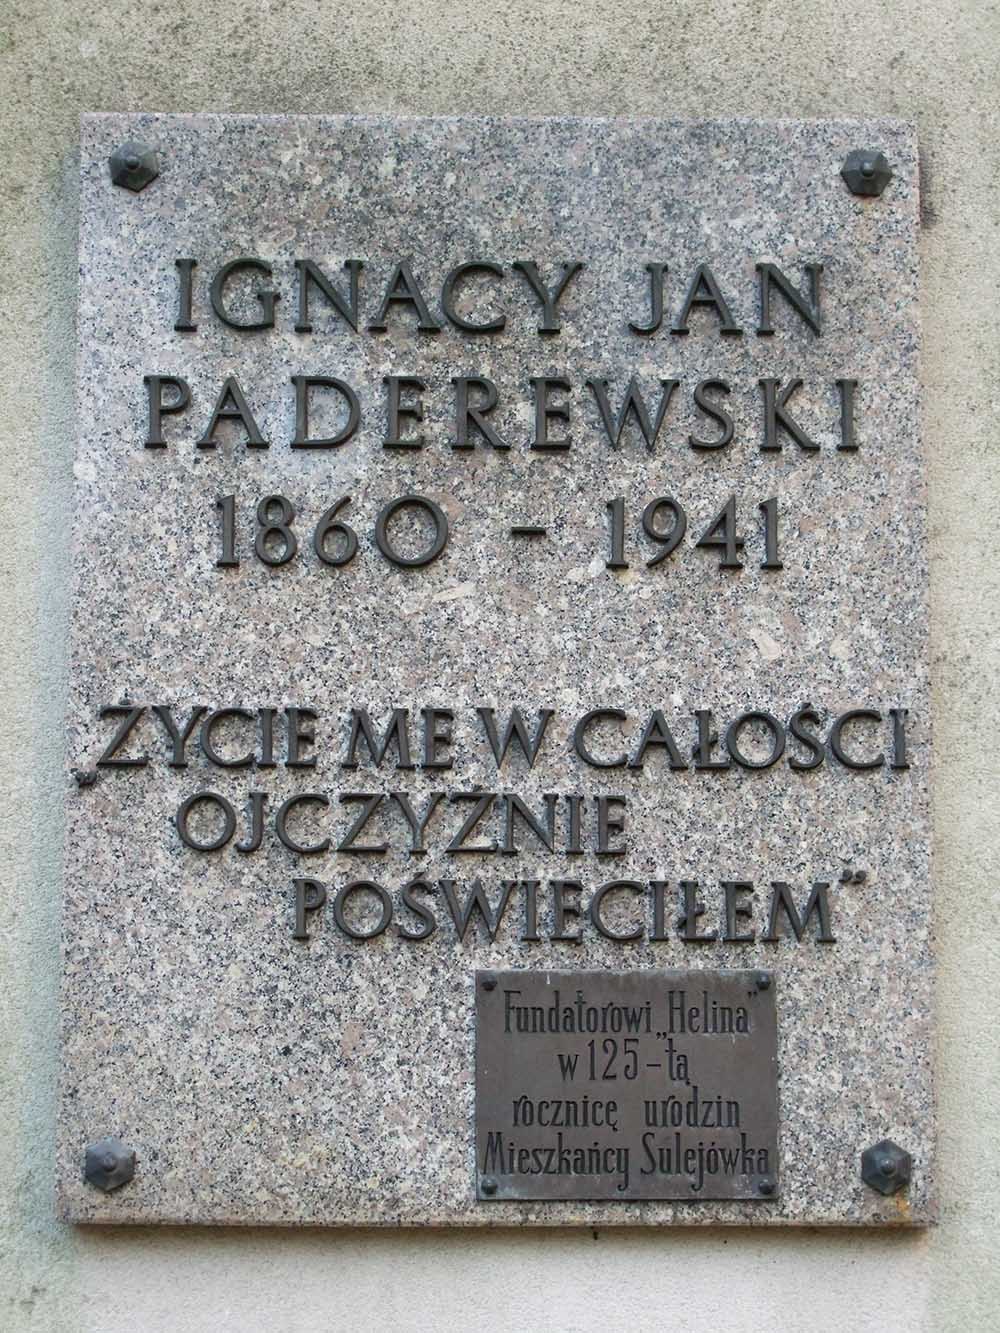 Former Villa Ignacy Paderewski #1